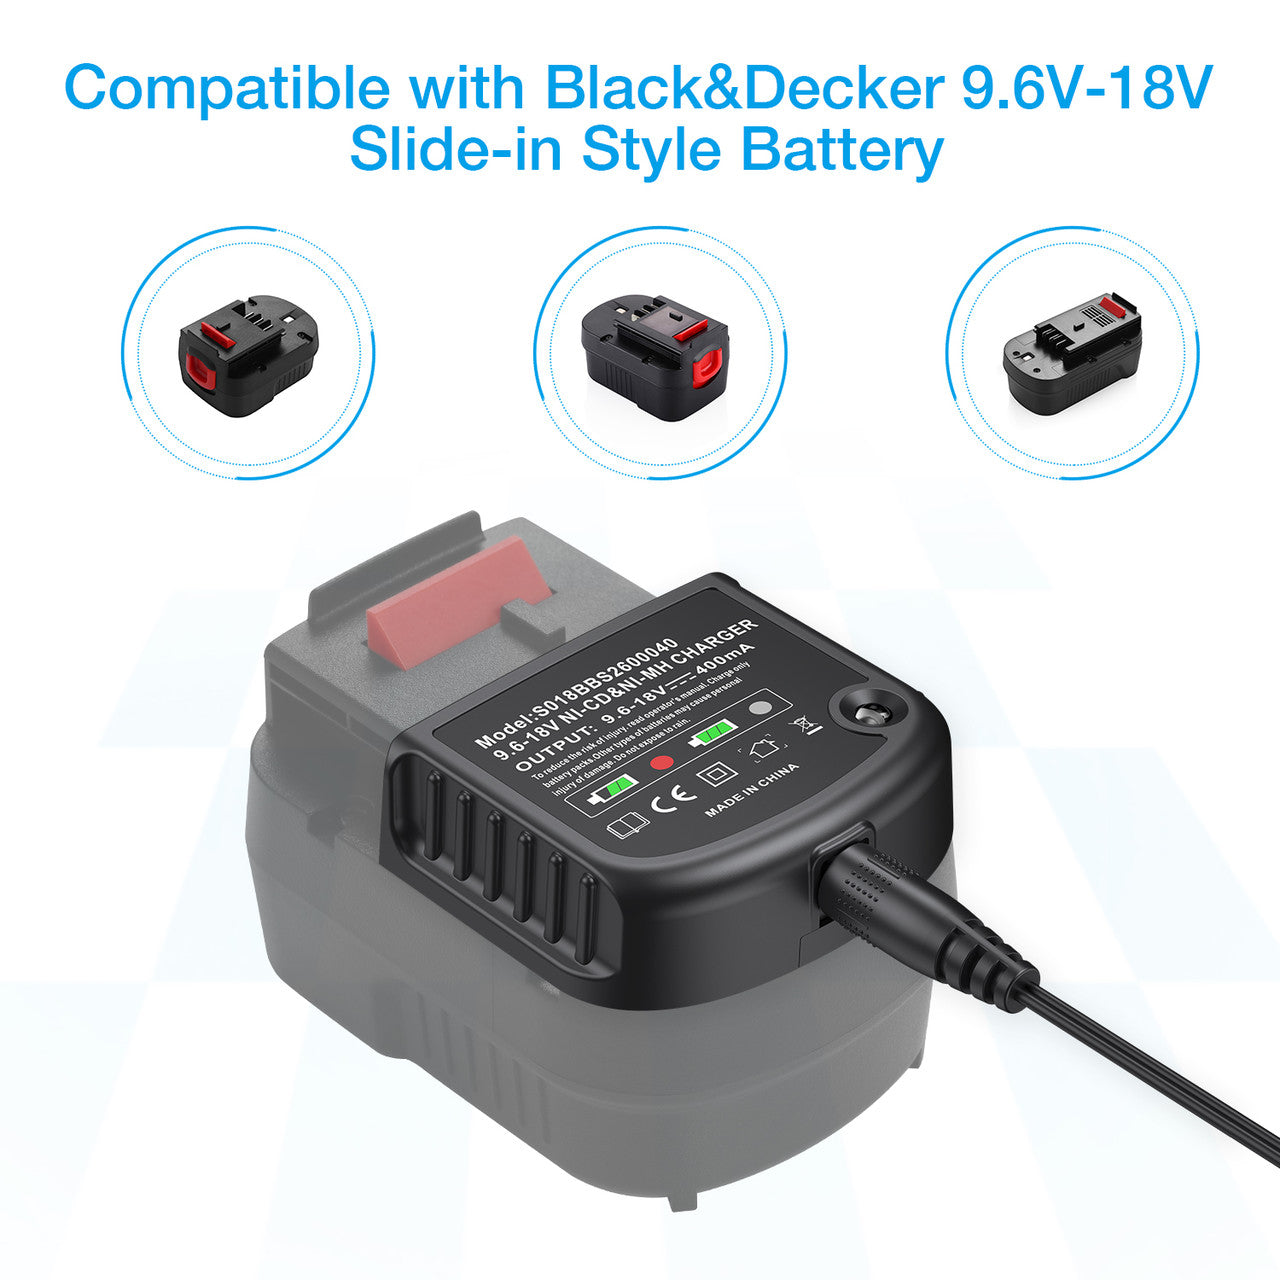 Powerextra Battery Charger for Black & Decker 9.6V-18V NiCad & NiMh Battery